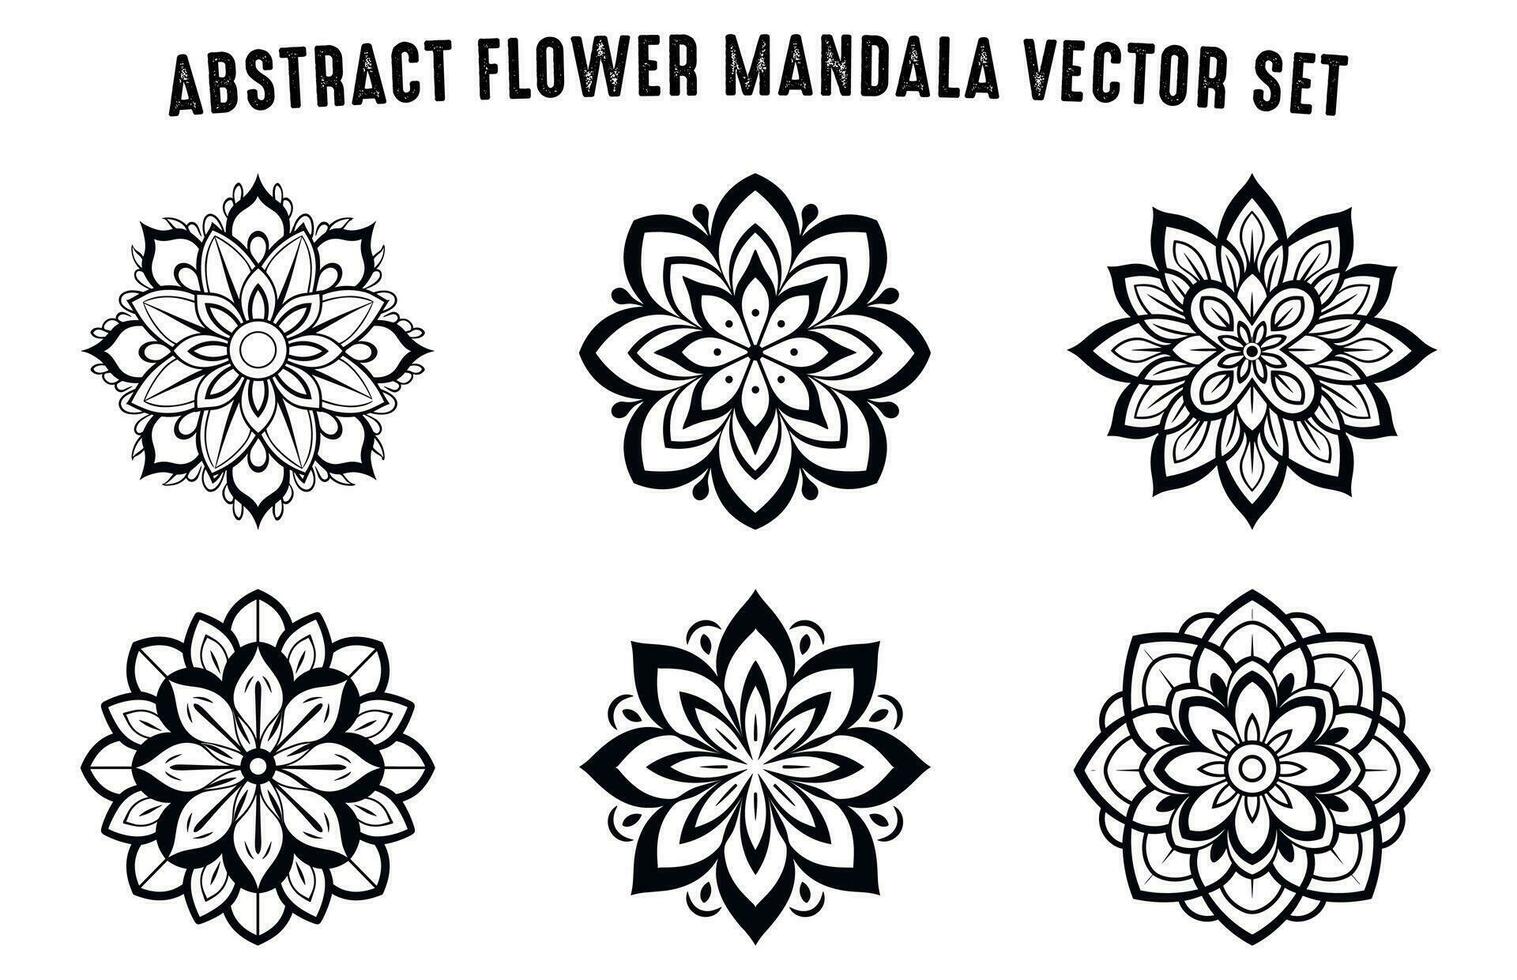 zwart en wit abstract circulaire patroon mandala vector vrij, mandala lijn tekening ontwerp, sier- mandala met bloemen patronen, sier- luxe mandala patroon